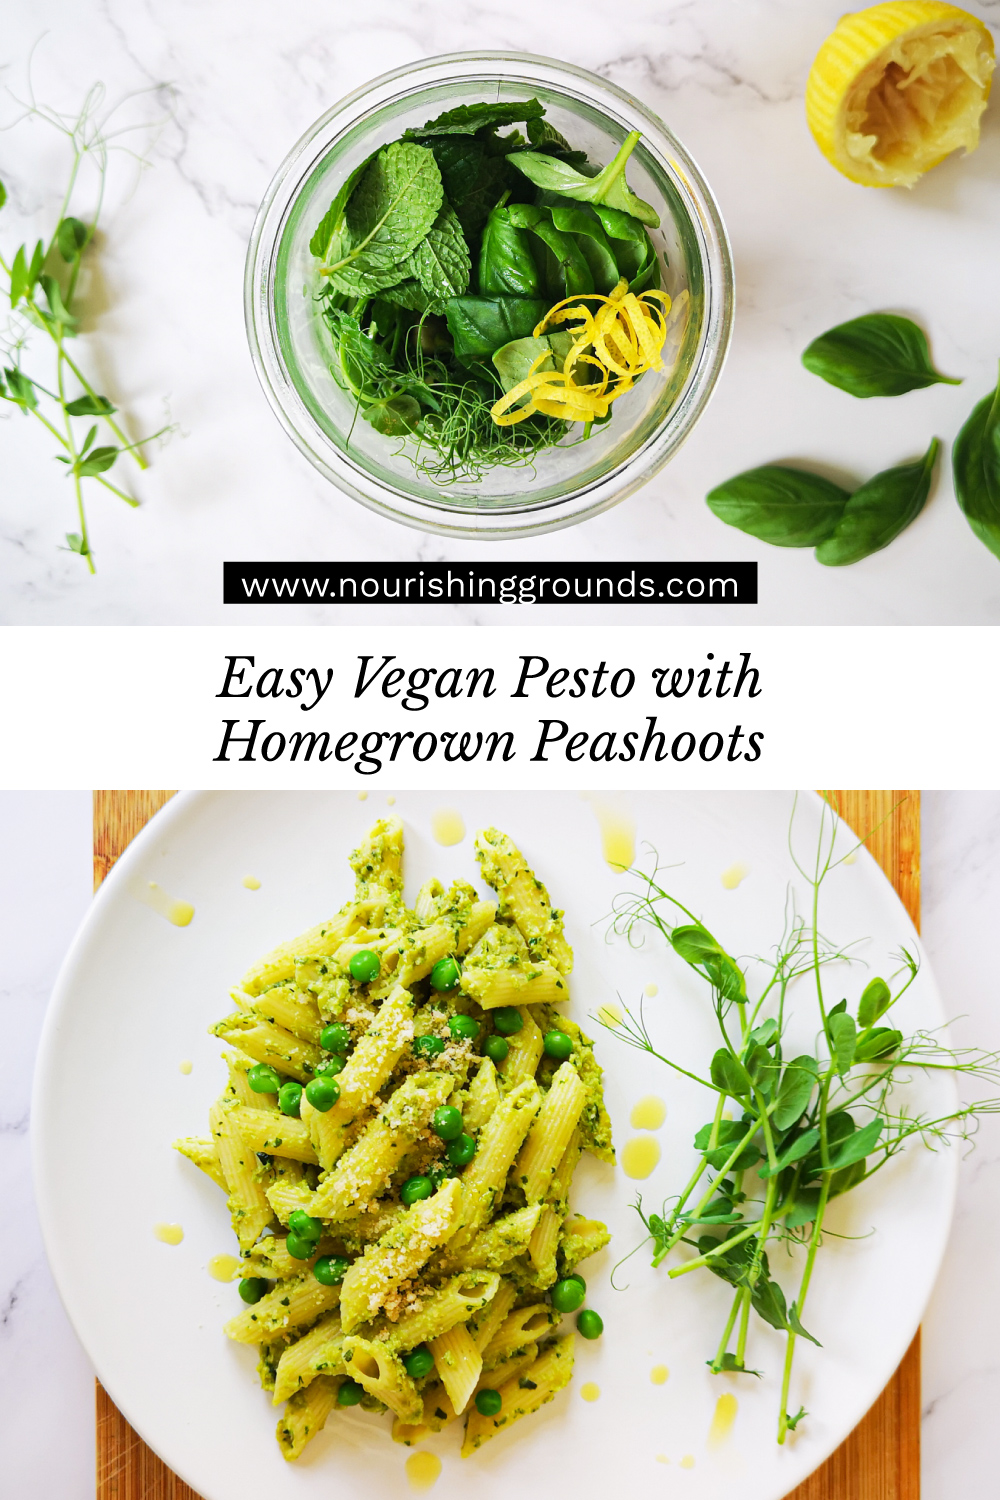 Easy Vegan Pesto with Homegrown Peashoots